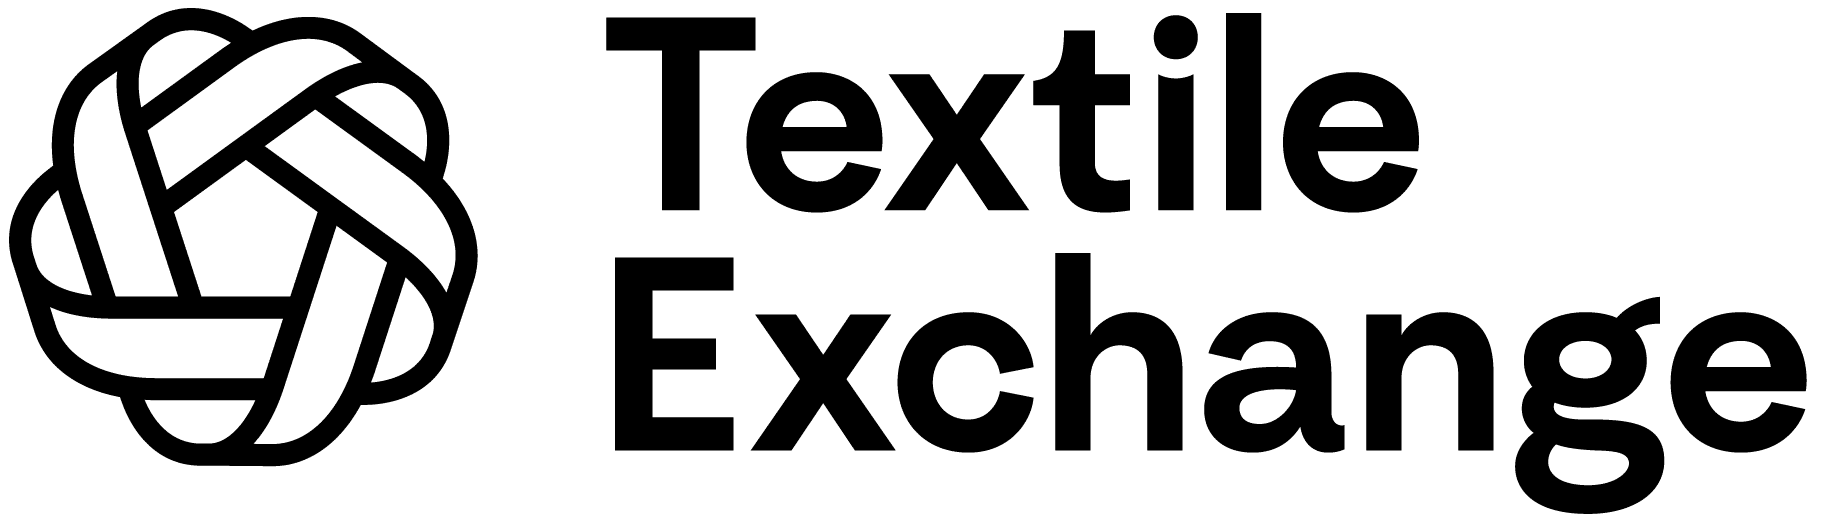 Textile Exchange Logo 1 1 | Textile Exchange 